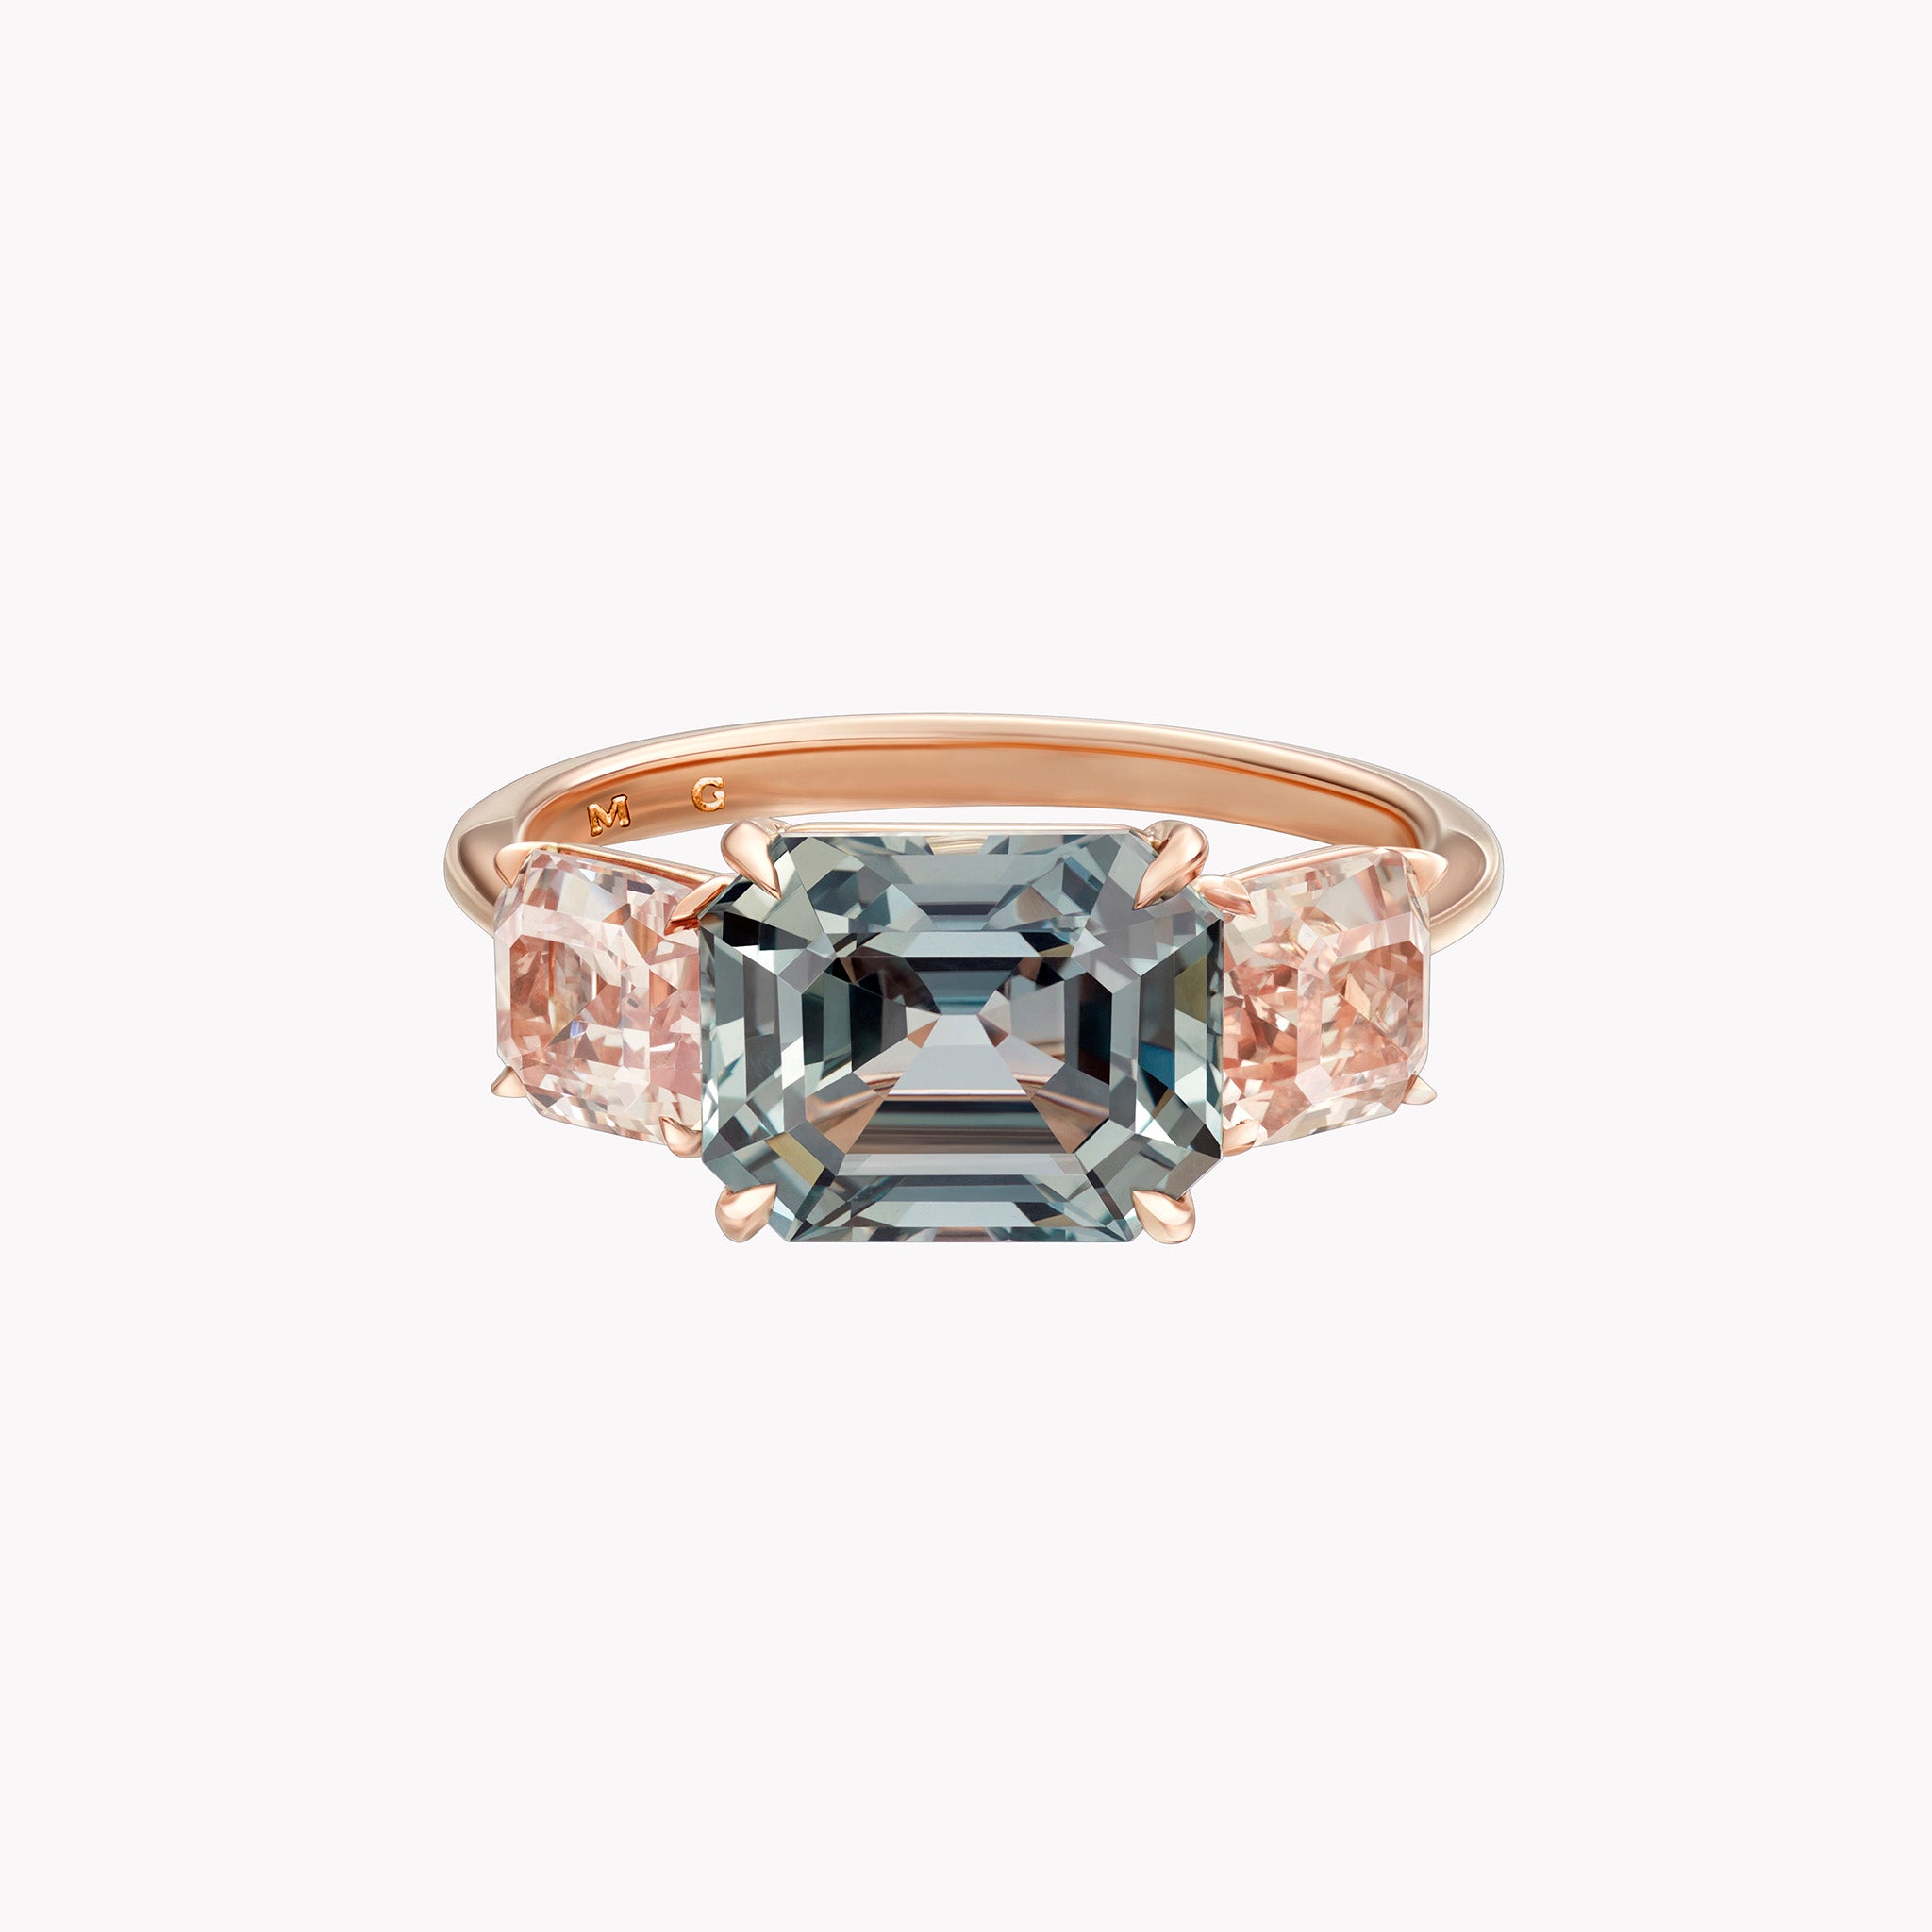 Three Stone Emerald Cut Sapphire Ring